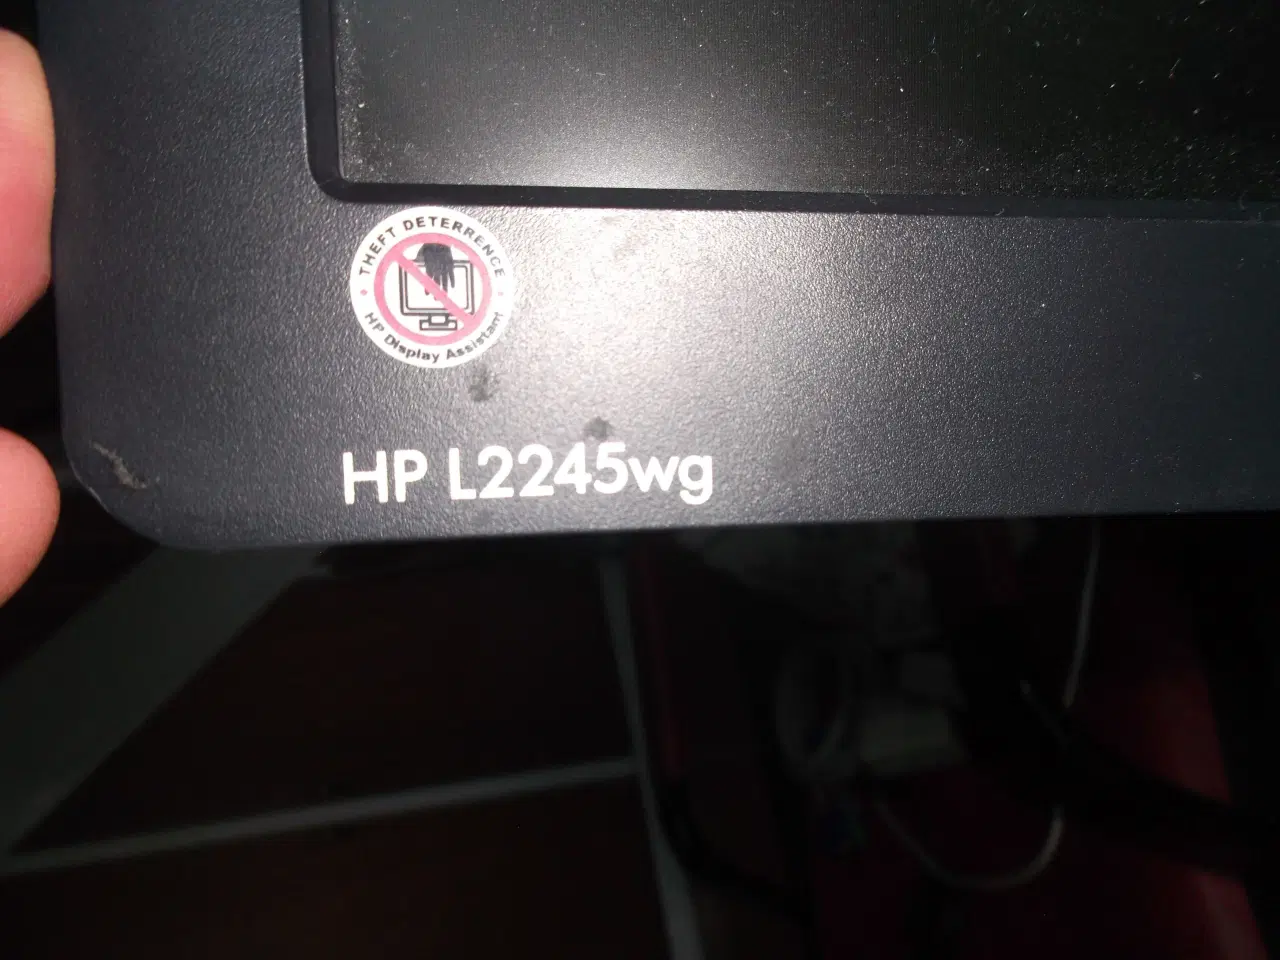 Billede 4 - HP LP2245wg 22" widescreen LCD skærm med USB 2.0